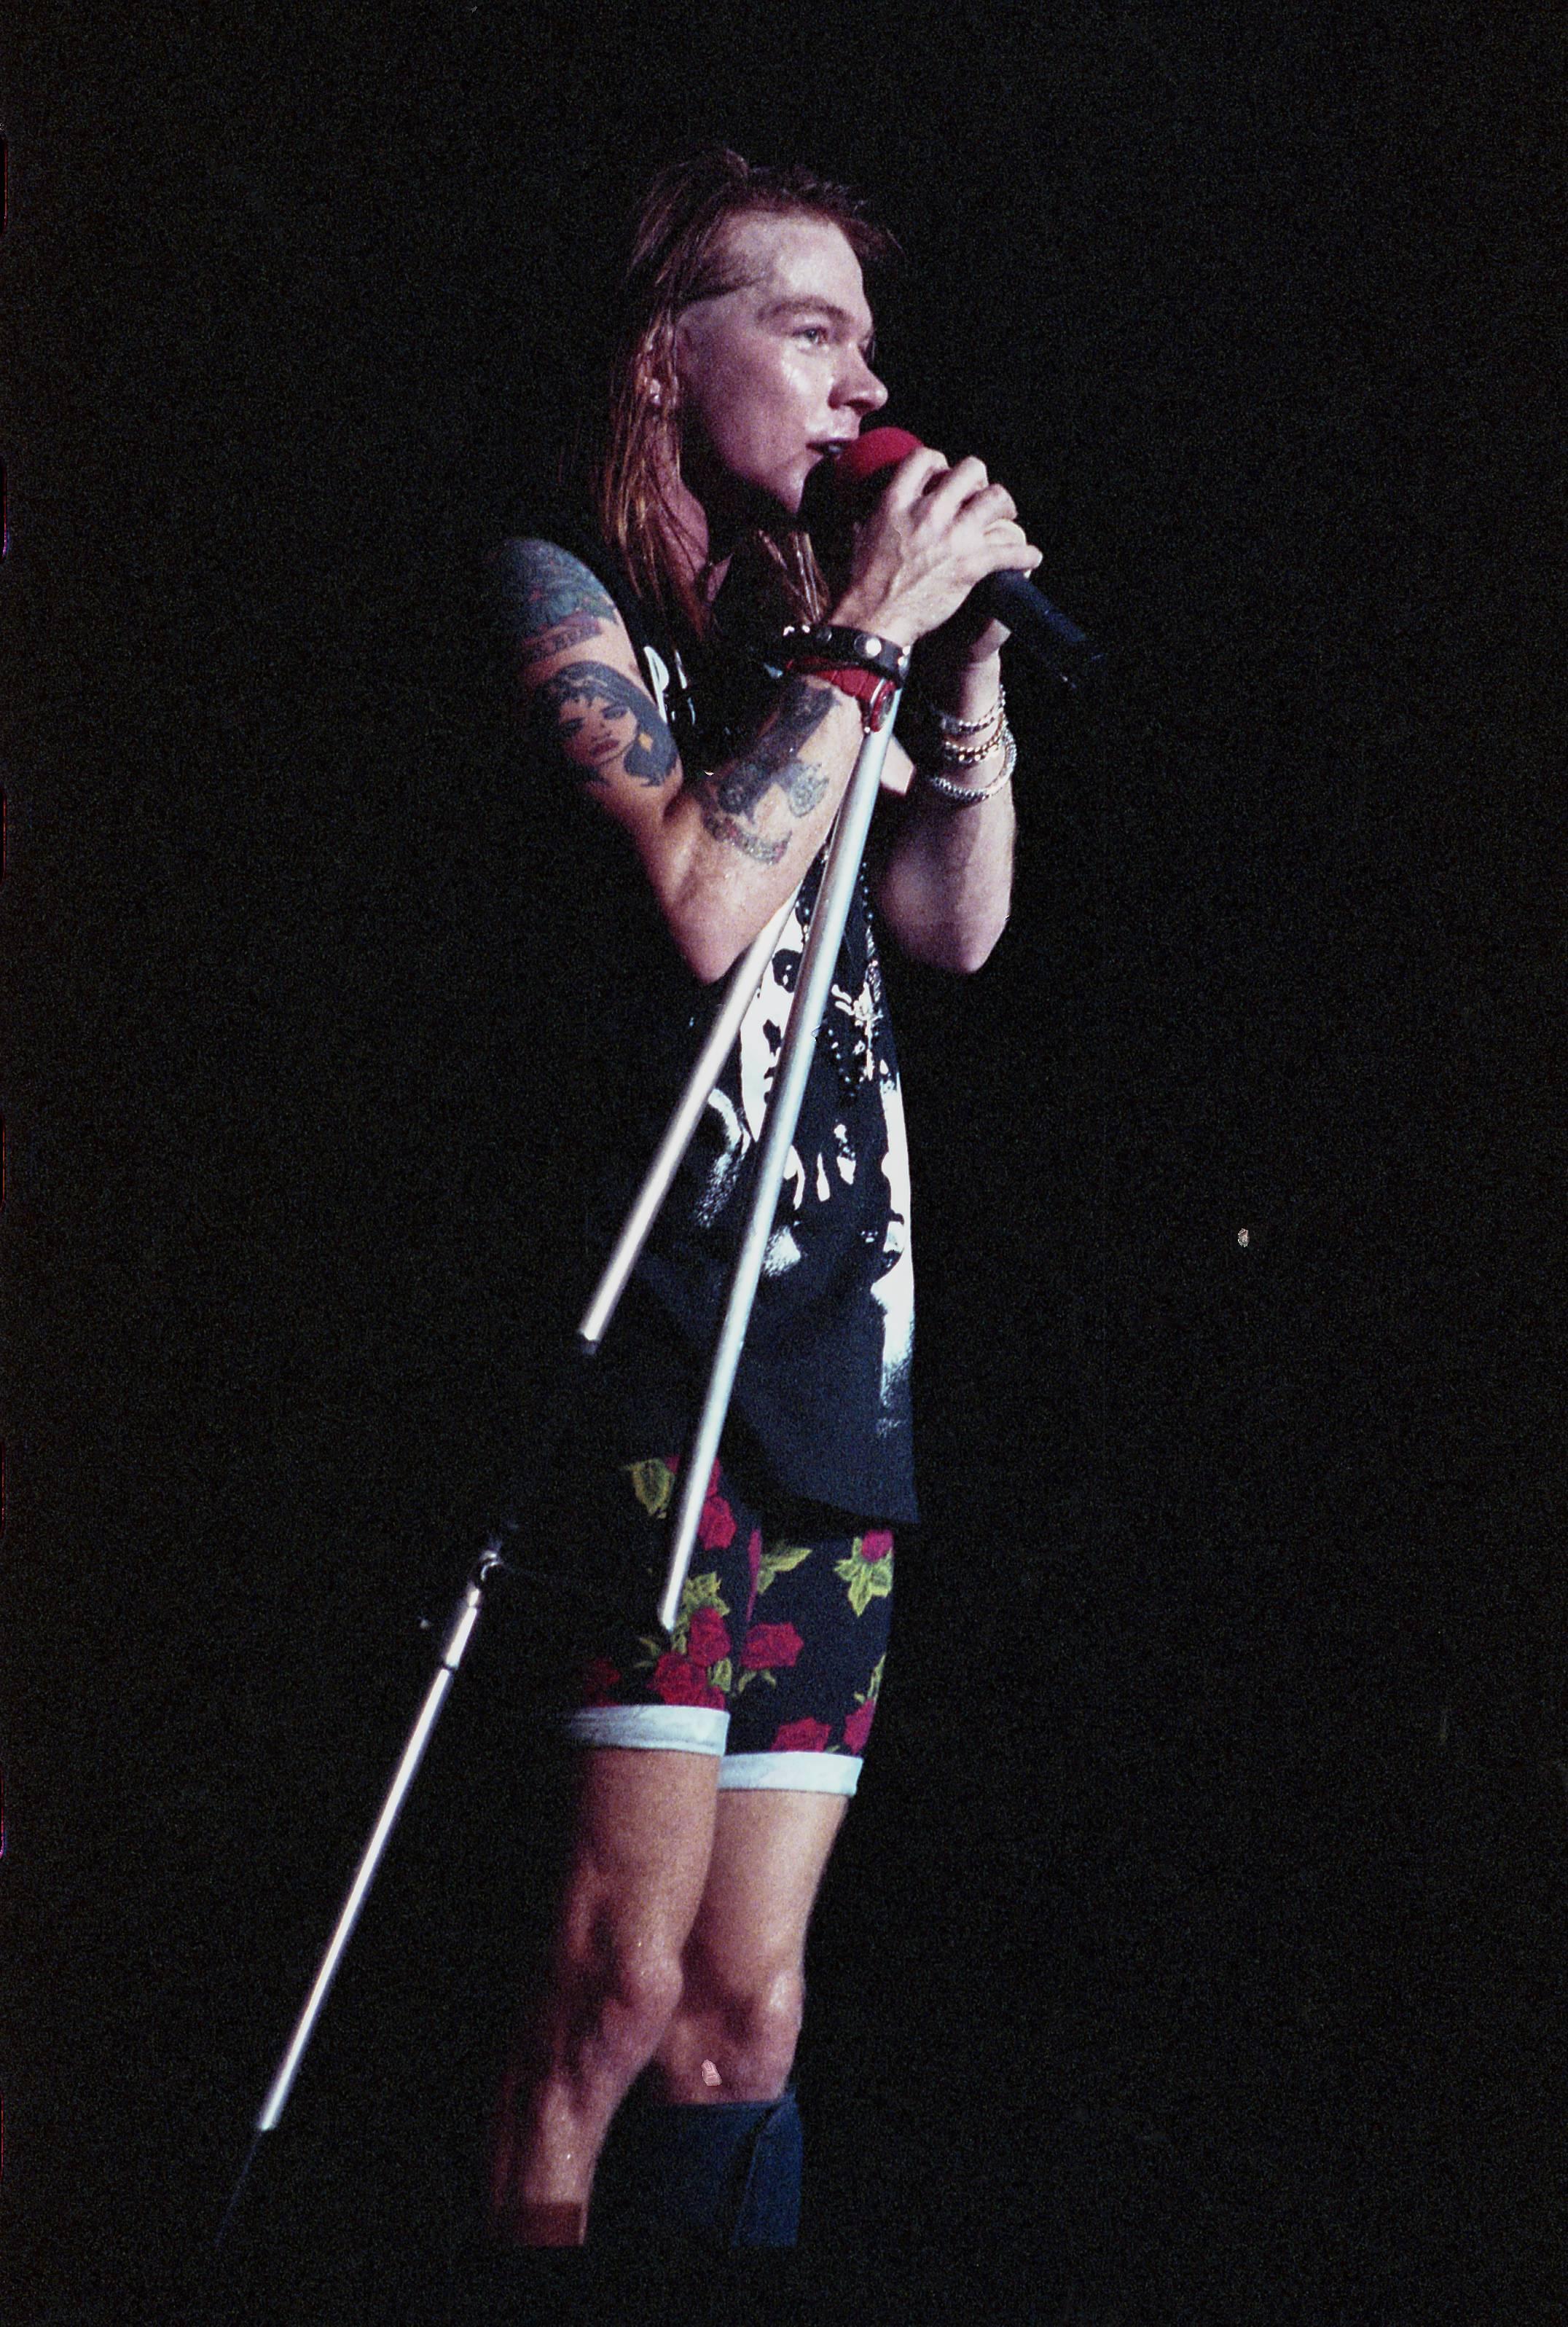 Tony Defilippis Portrait Photograph - Axel Rose, Guns N' Roses Live on Stage - I Fine Art Print